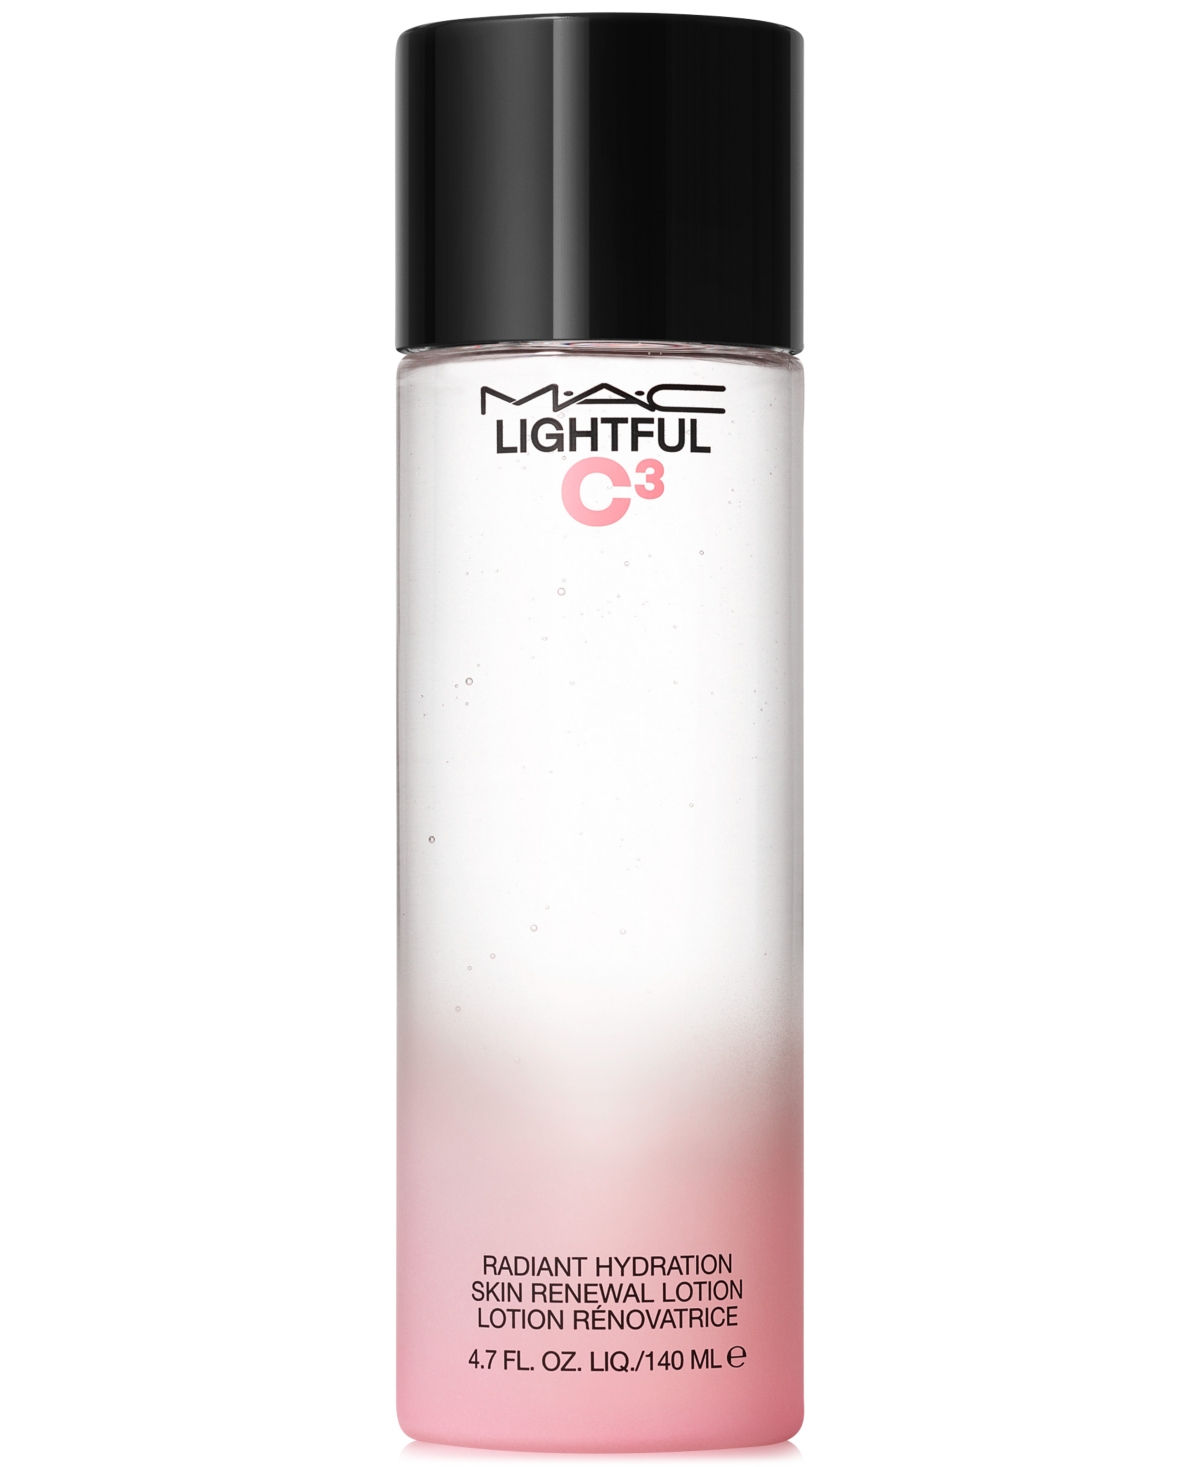 Mac Lightful Câ³ Radiant Hydration Skin Renewal Lotion In No Color